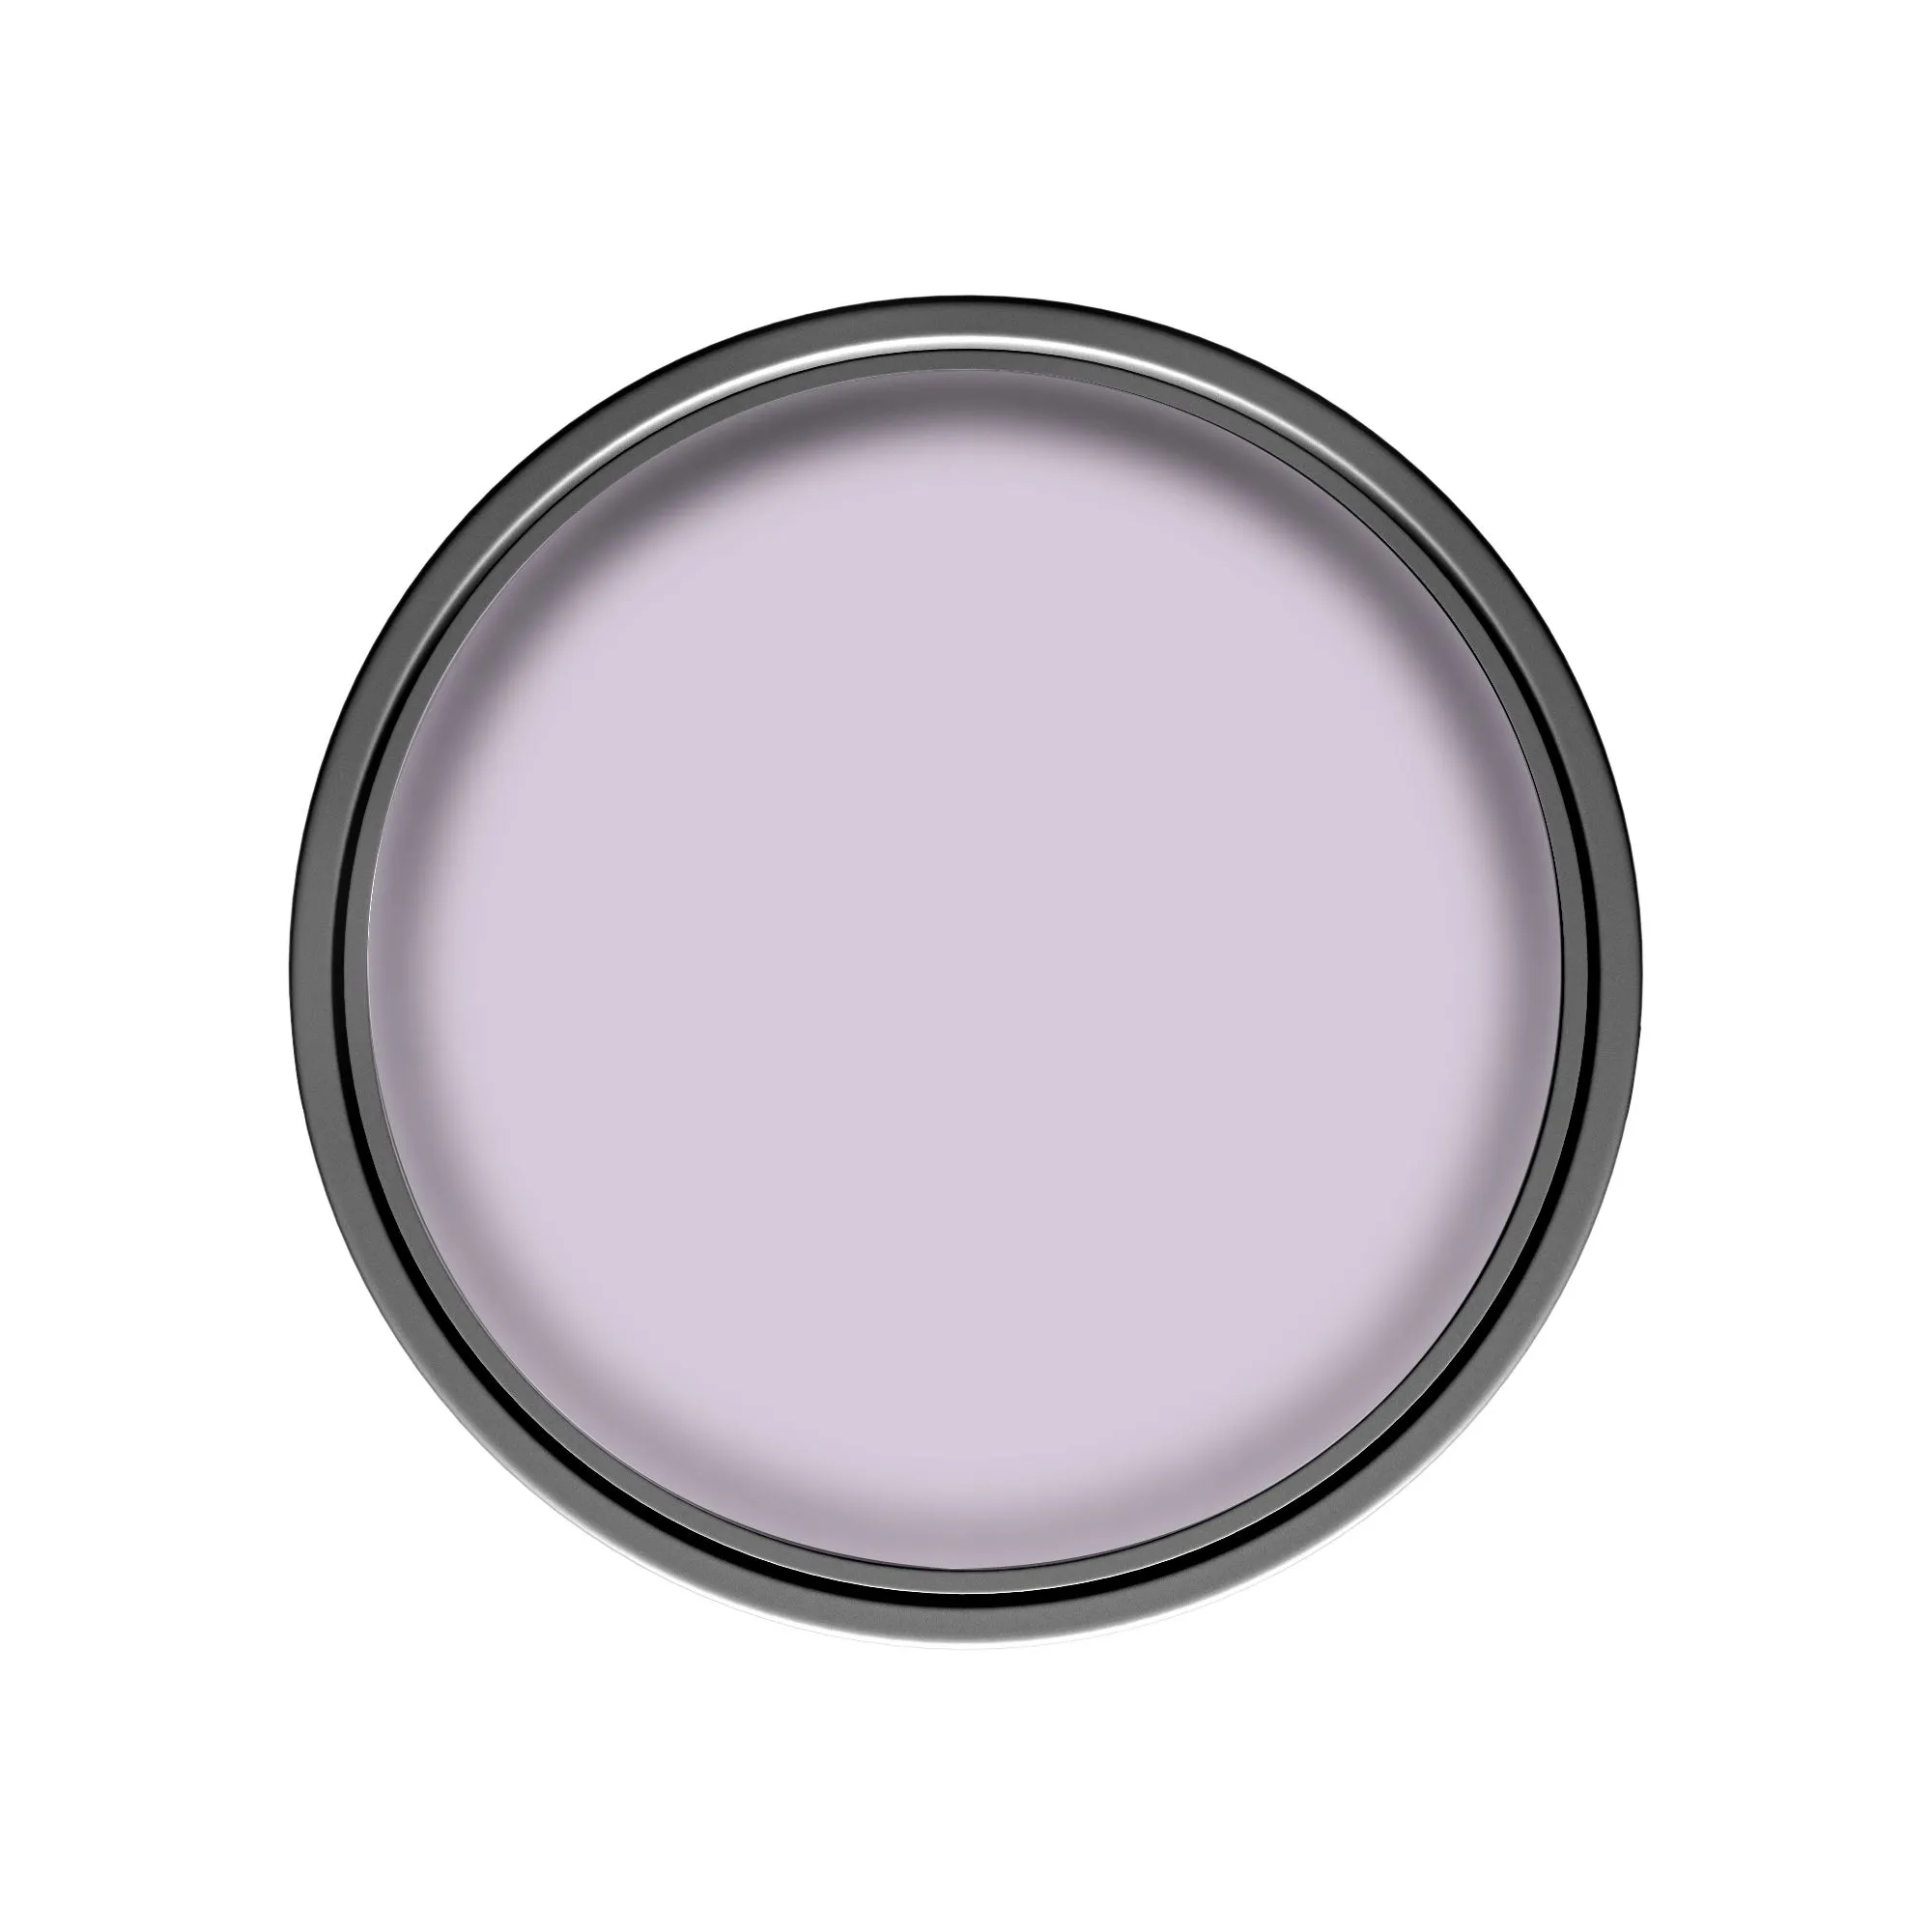 Dulux Pretty pink Matt Emulsion paint, 5L